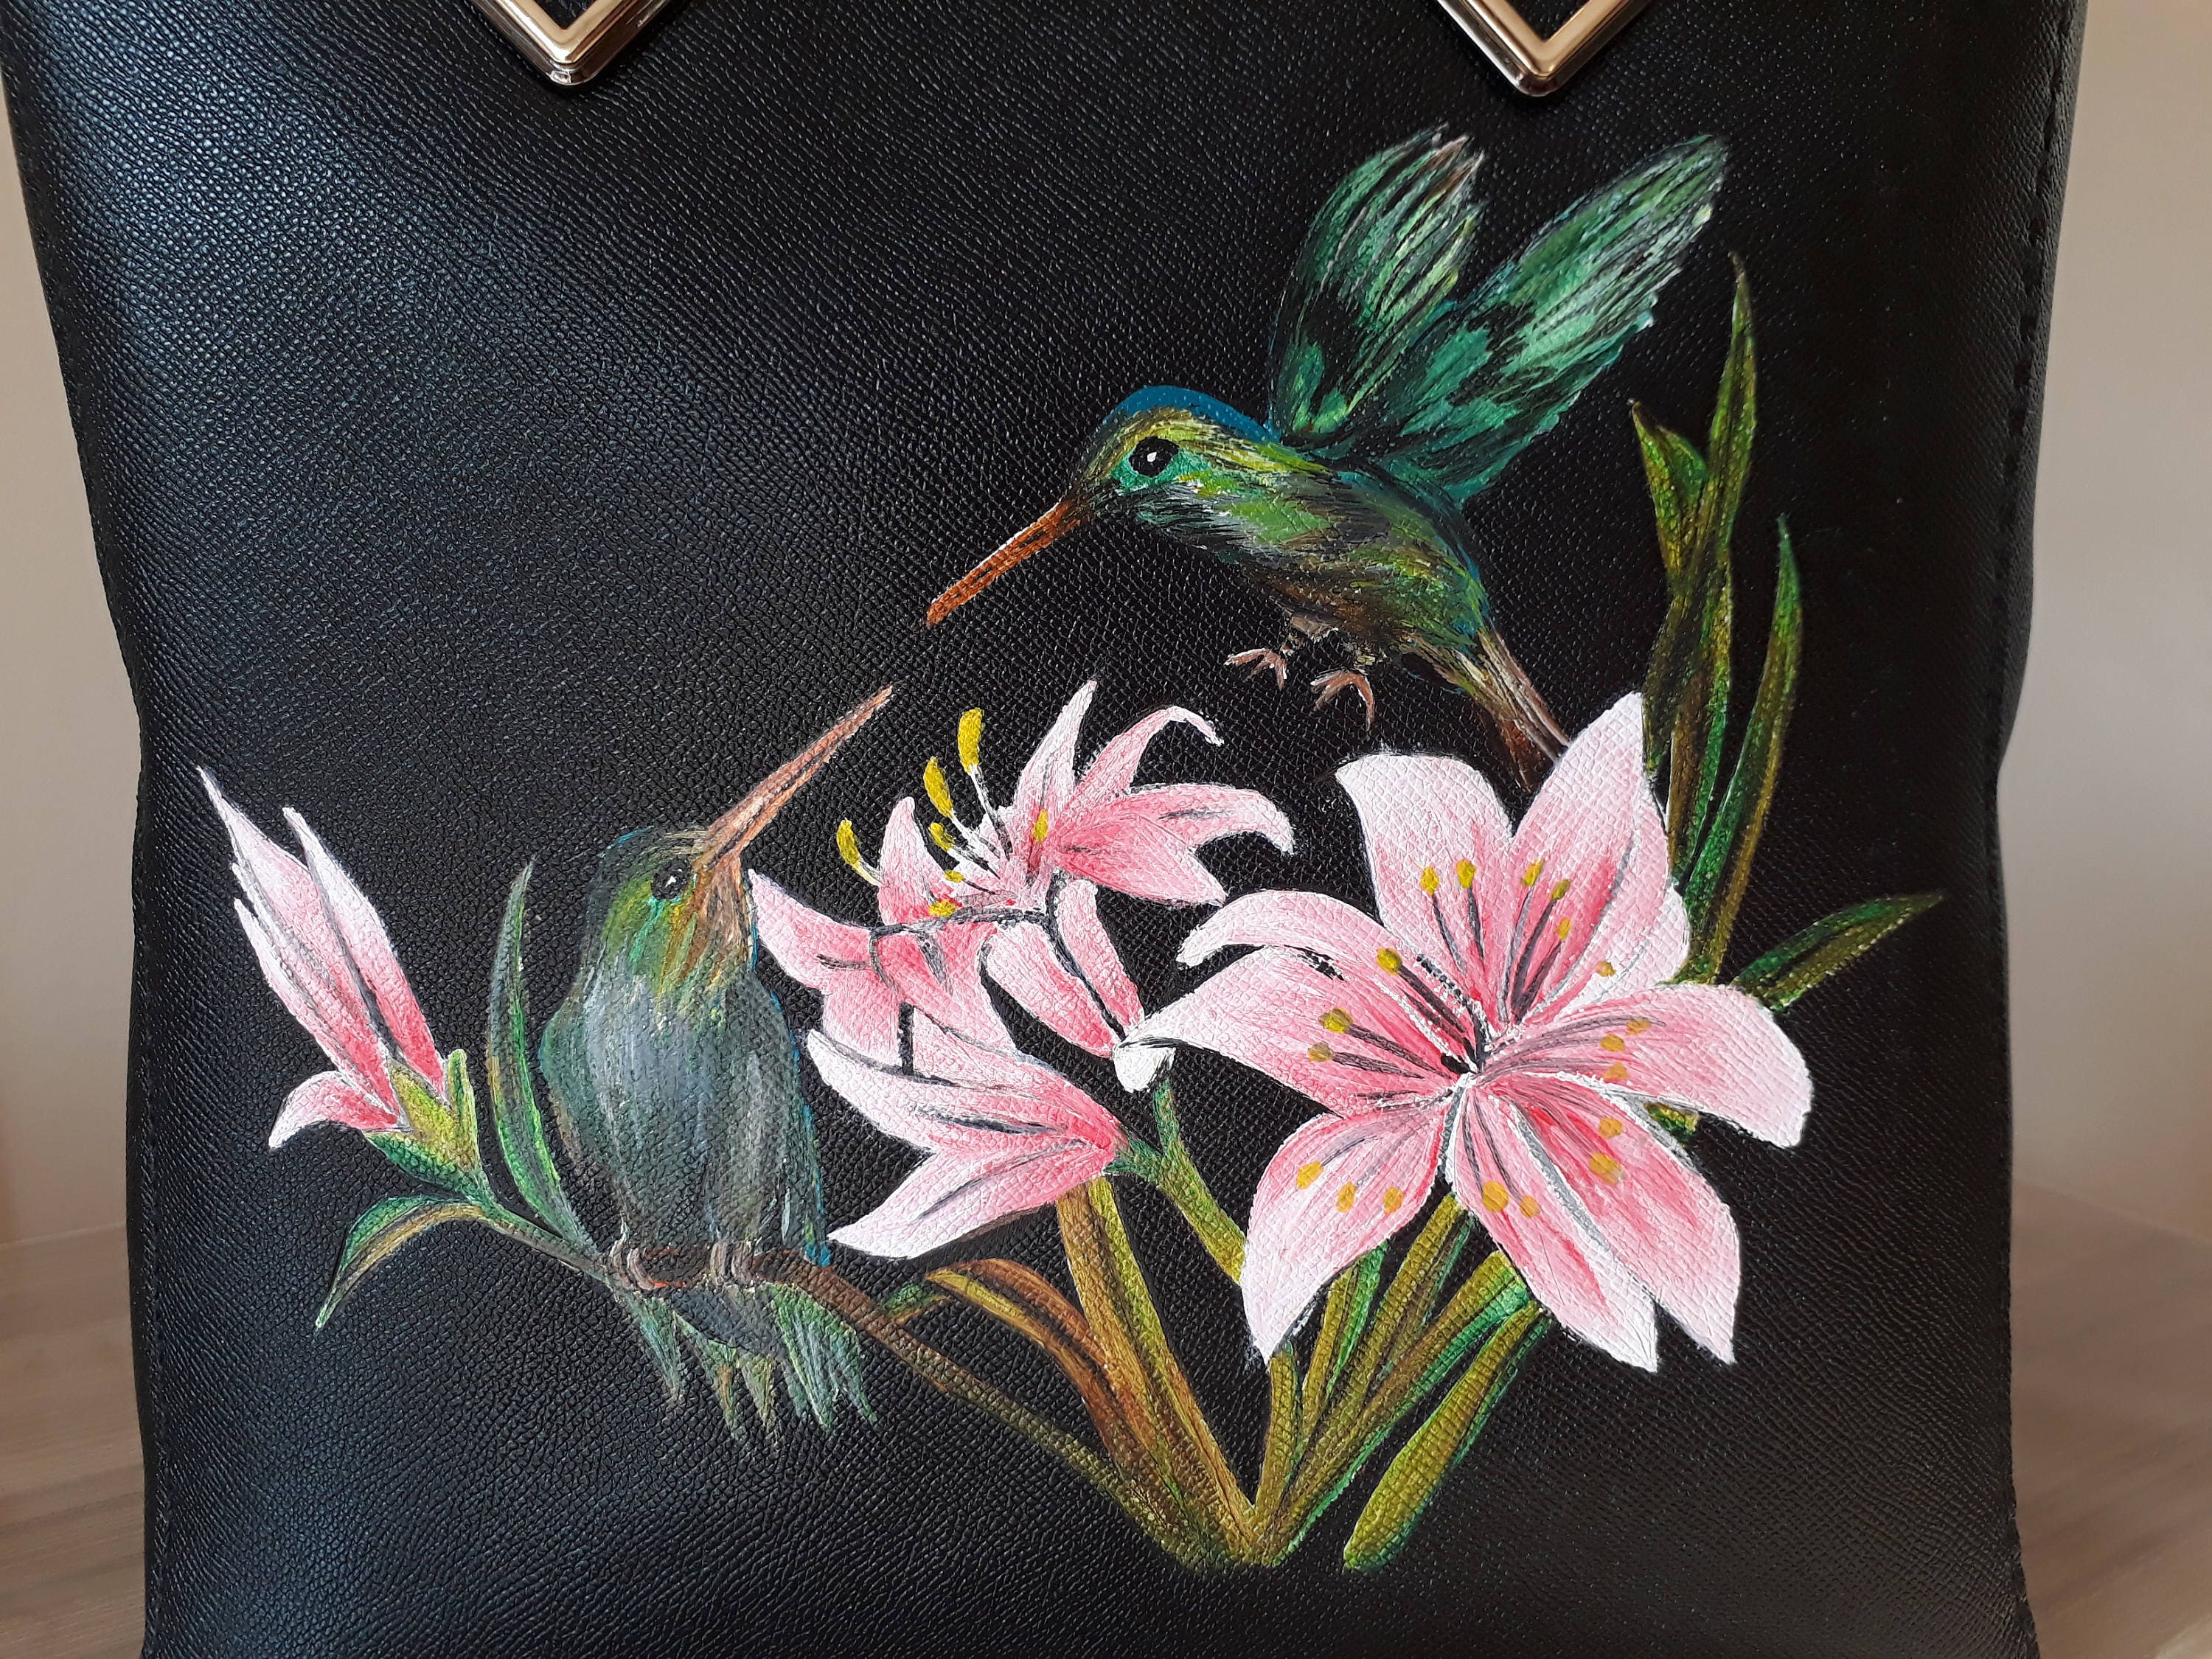 Painted Leather Bag, Unique Leather Purse, Humming Bird Handbag, Art Bag, Leather Hand-Painted, Flowers Bag, Artistic Handbag